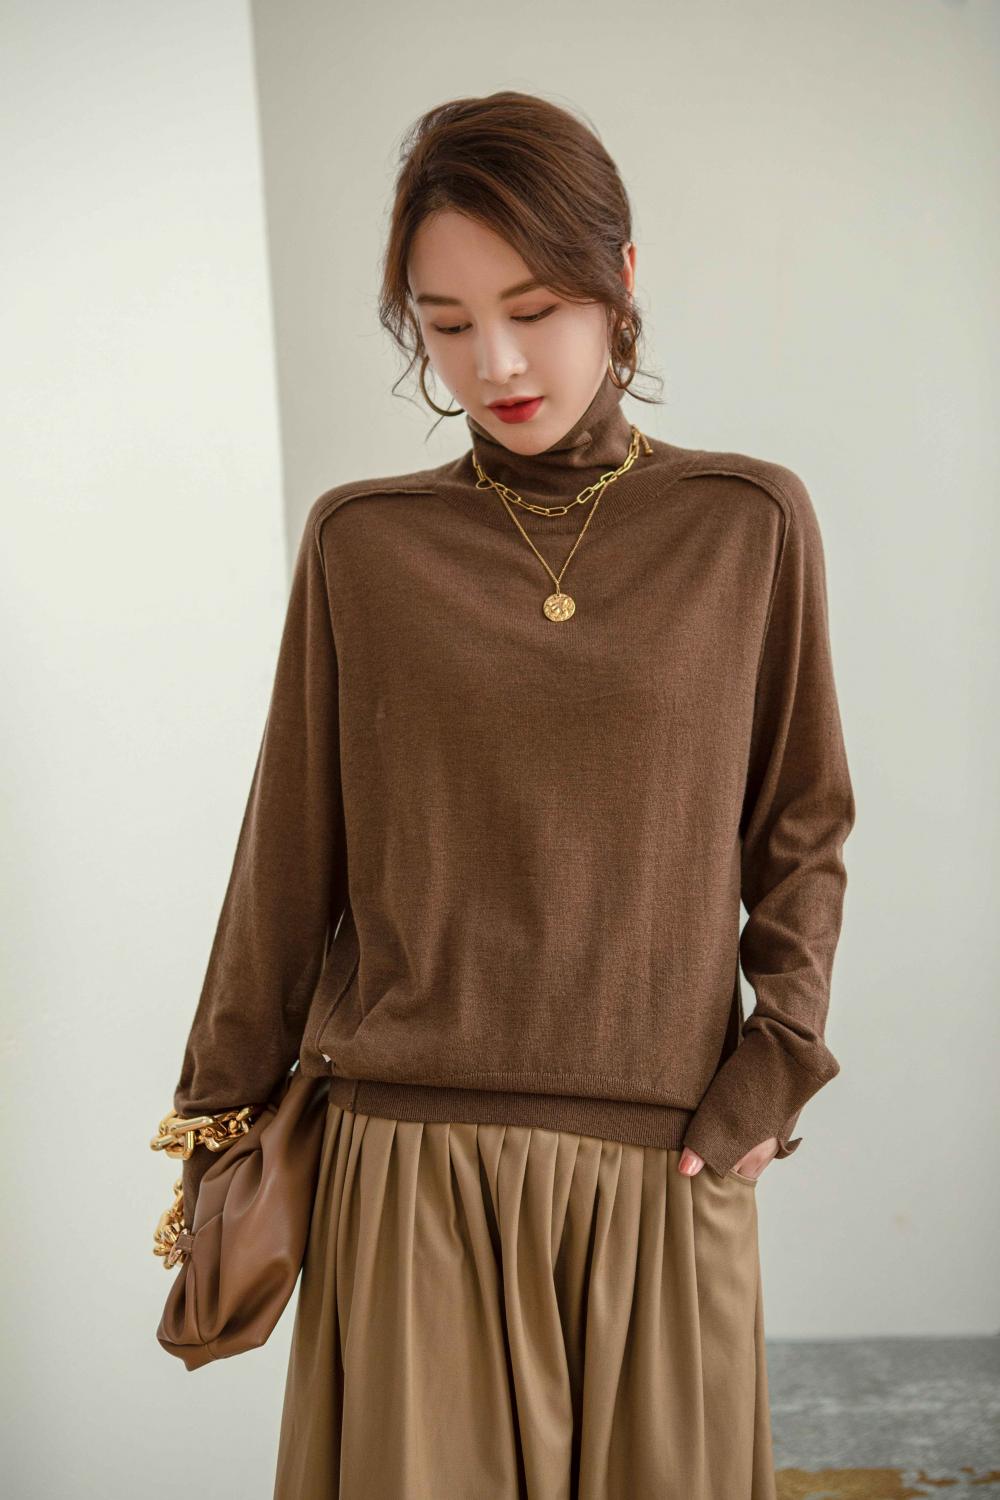 Superfine wool knit bottom sweater female western style